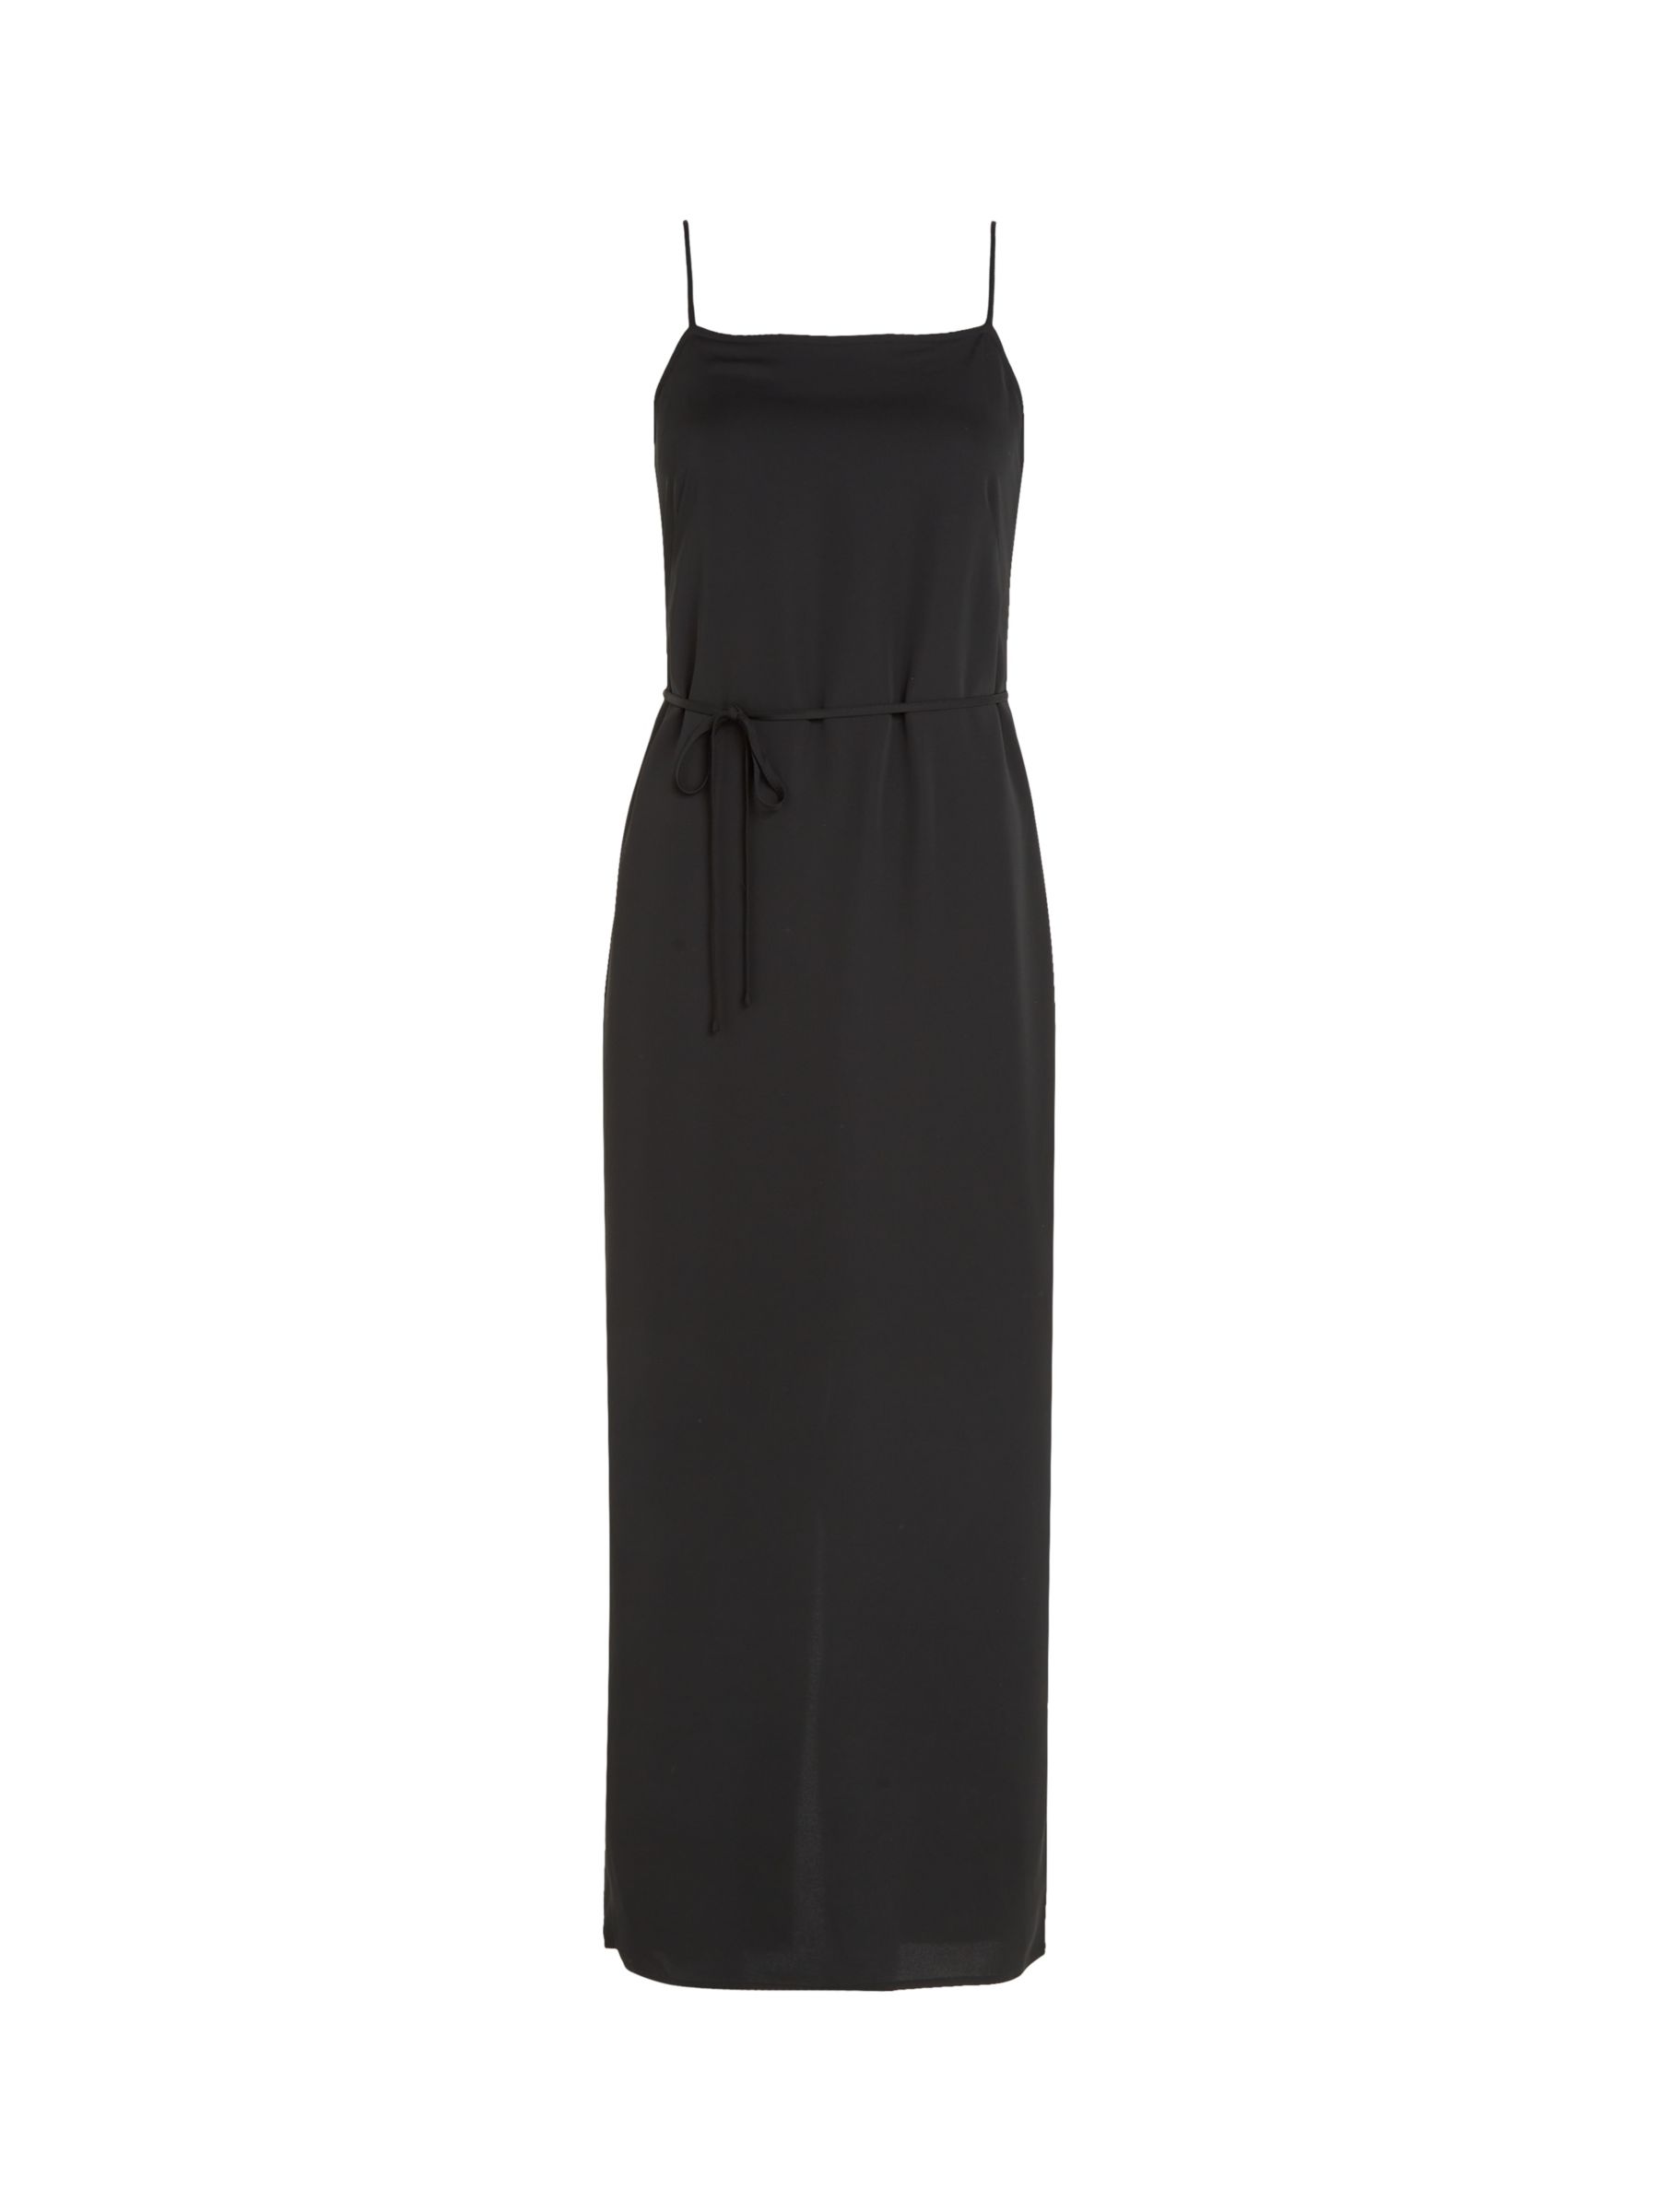 Calvin Klein Plain Belted Square Neck Midi Dress, CK Black, 10